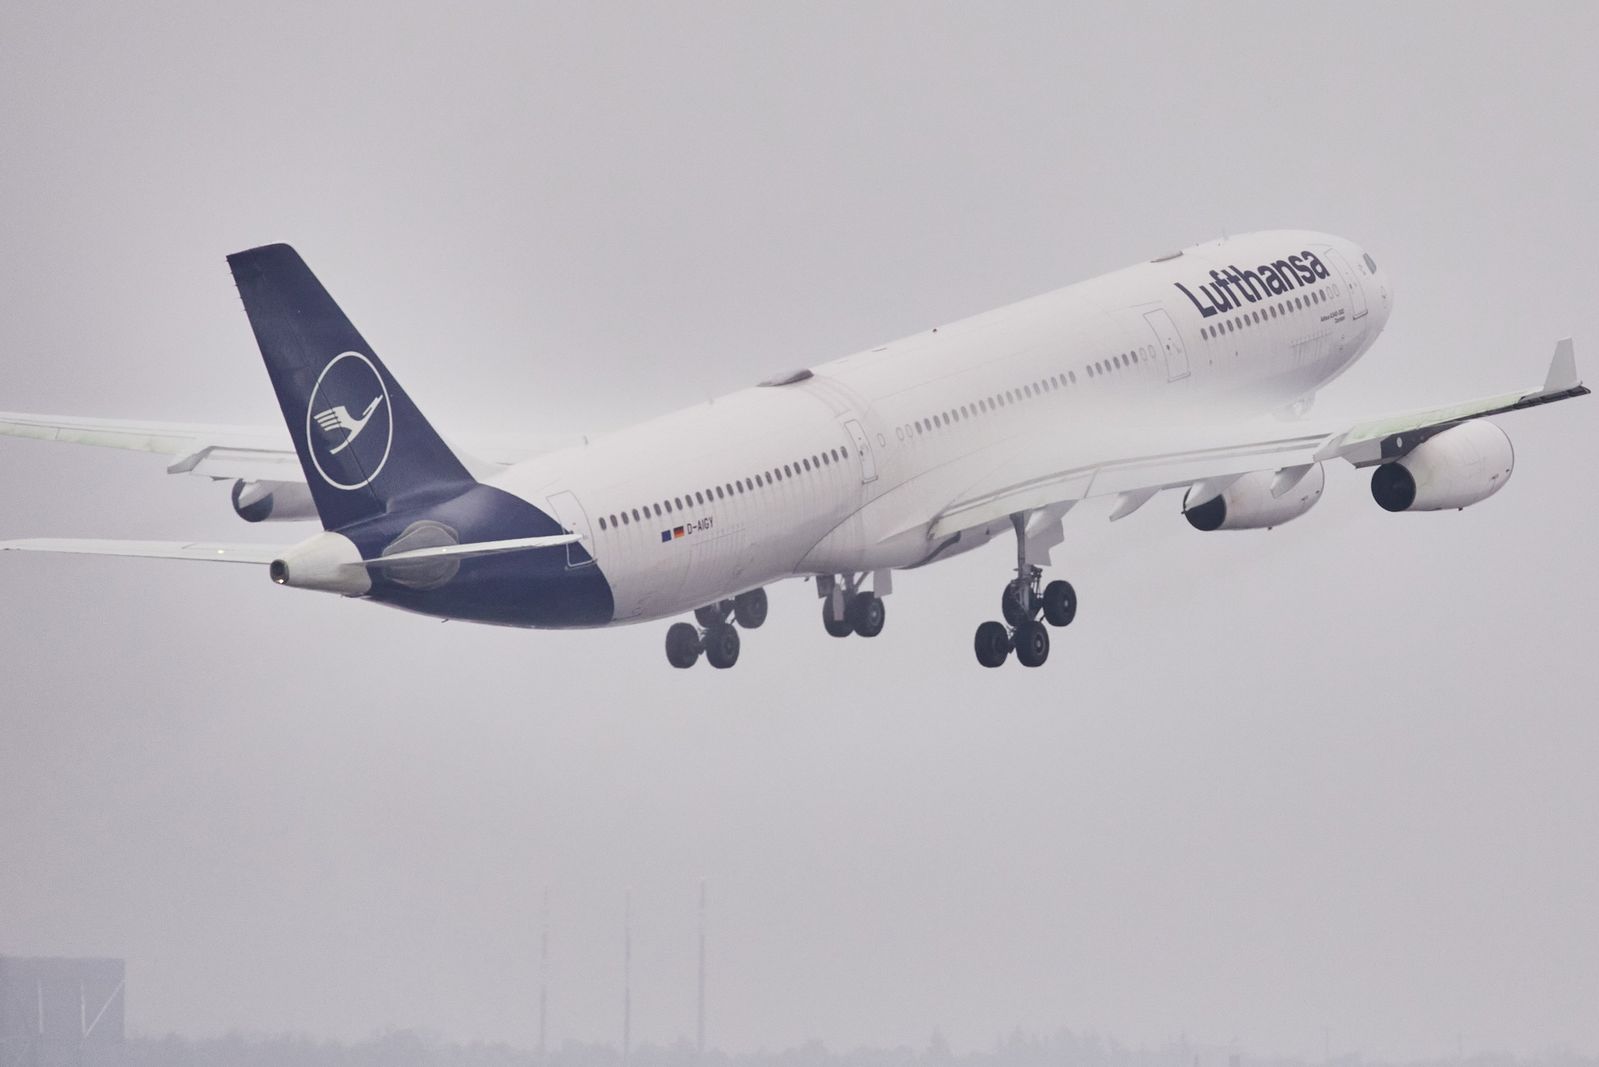 Lufthansa-A340: Fahrwerksprobleme bei Landung